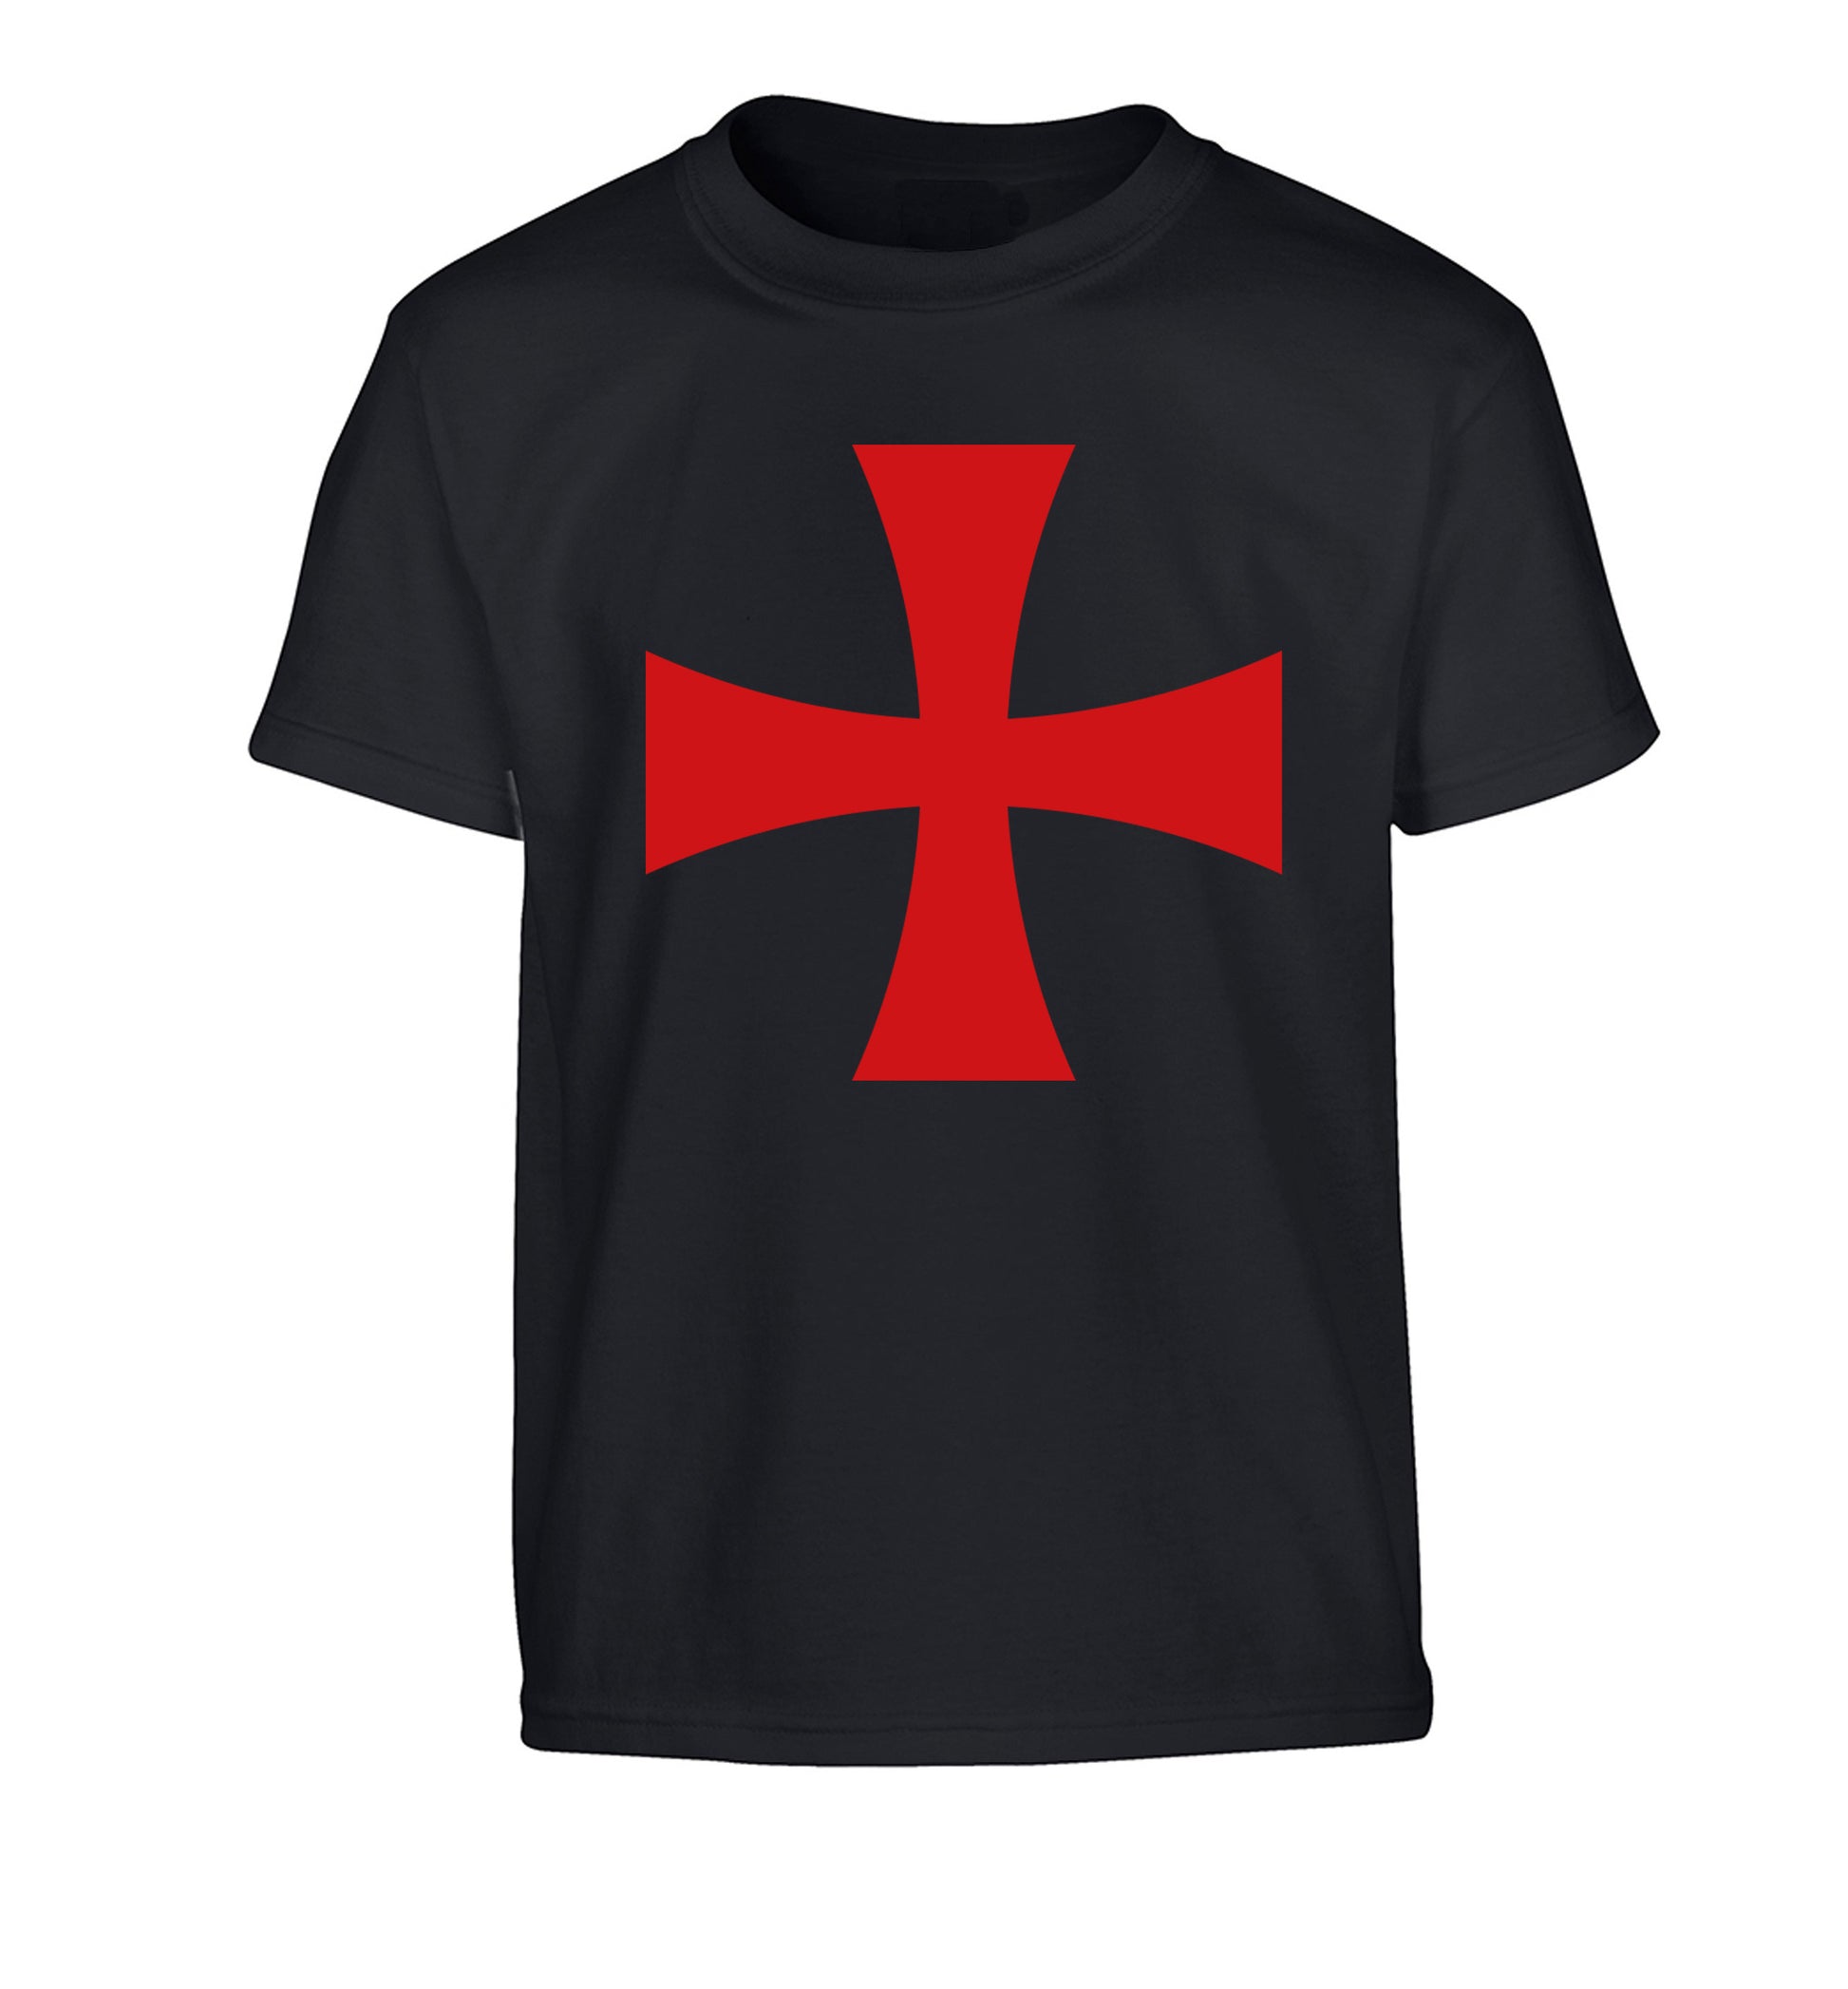 Knights Templar cross Children's black Tshirt 12-14 Years